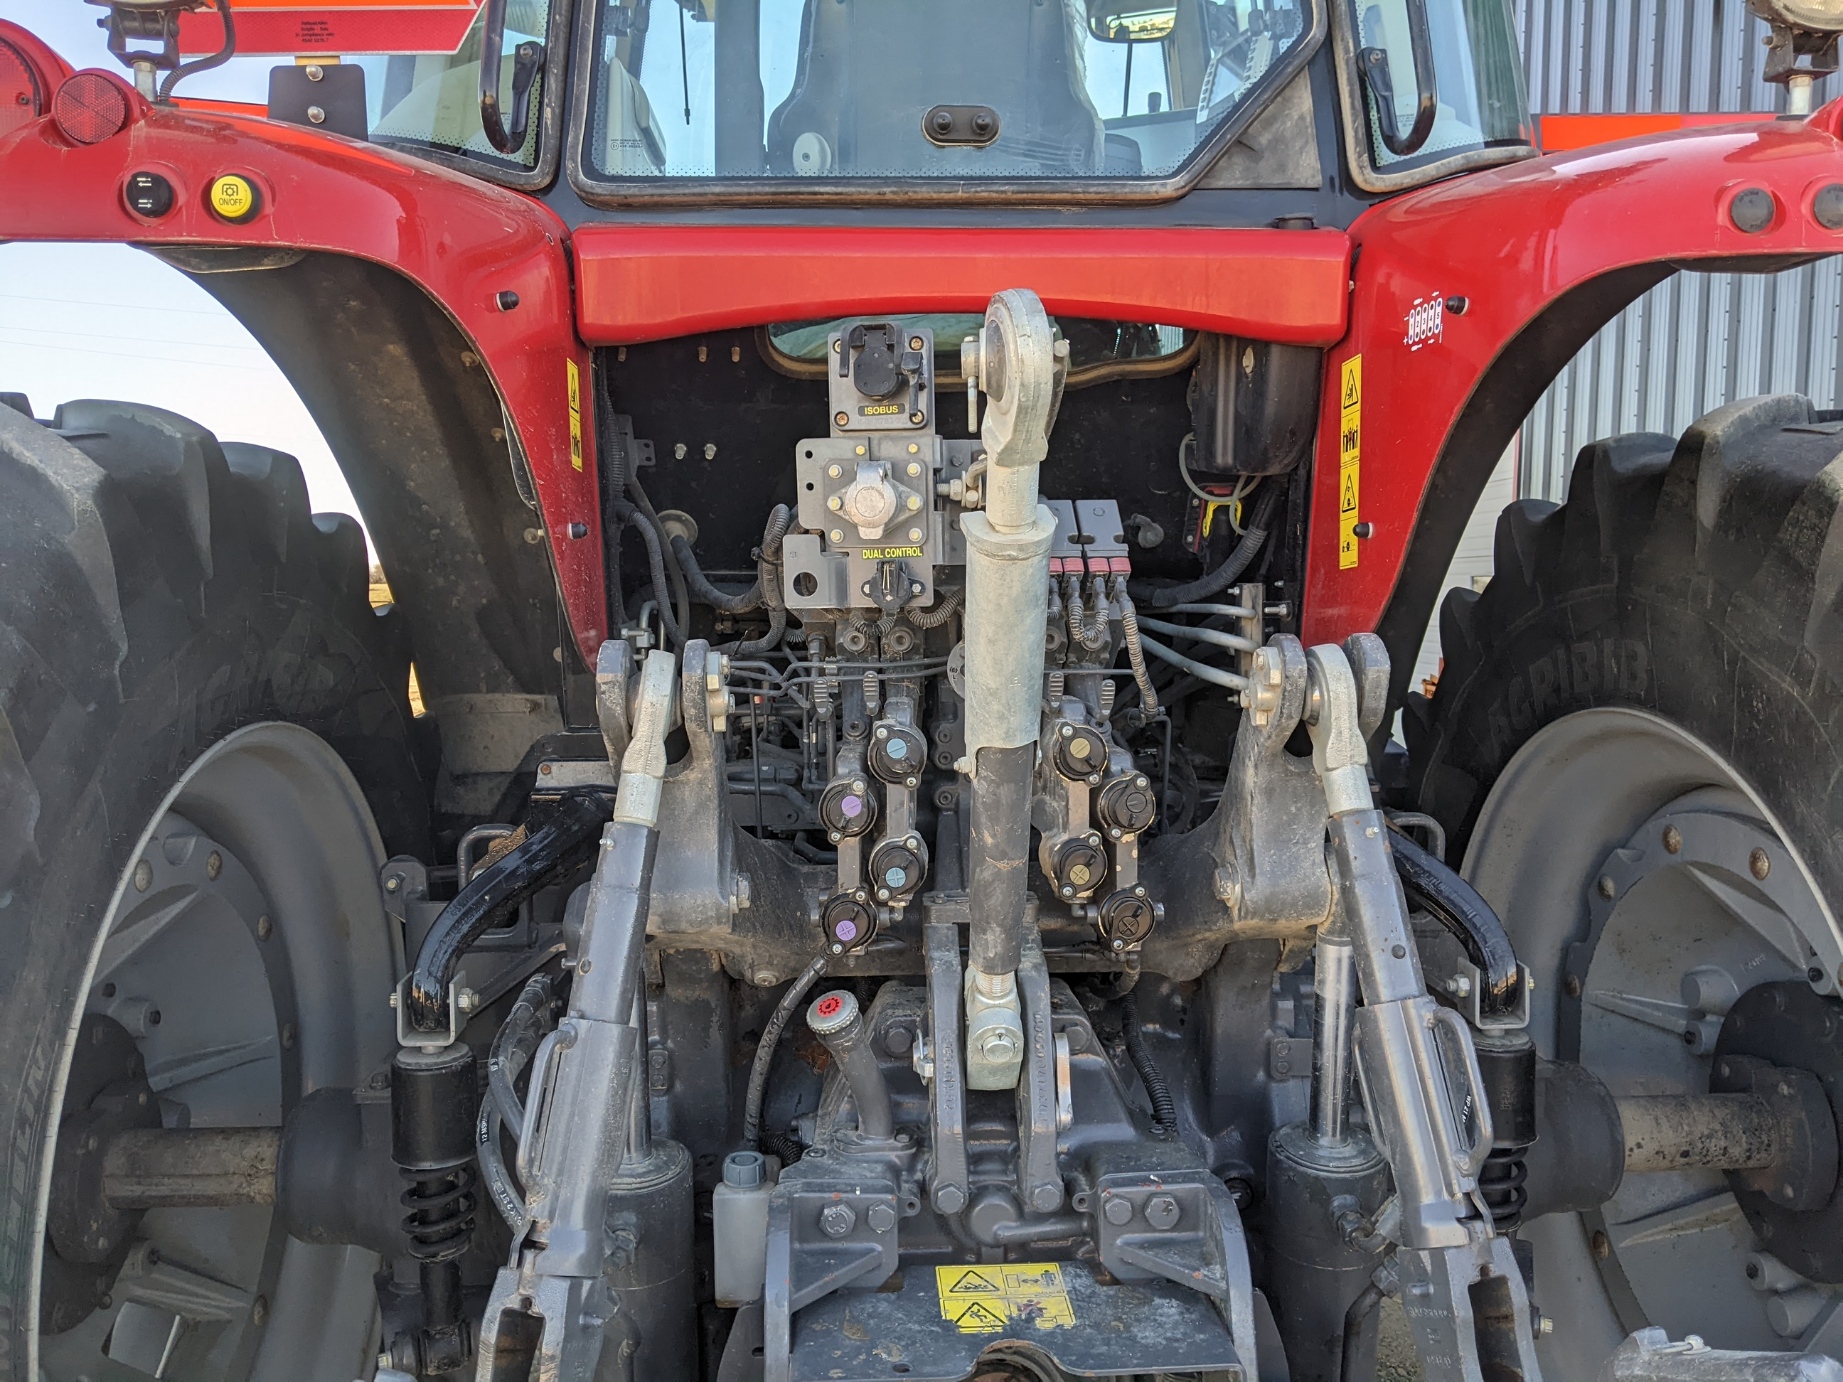 2019 Massey Ferguson 7720 Premium Tractor